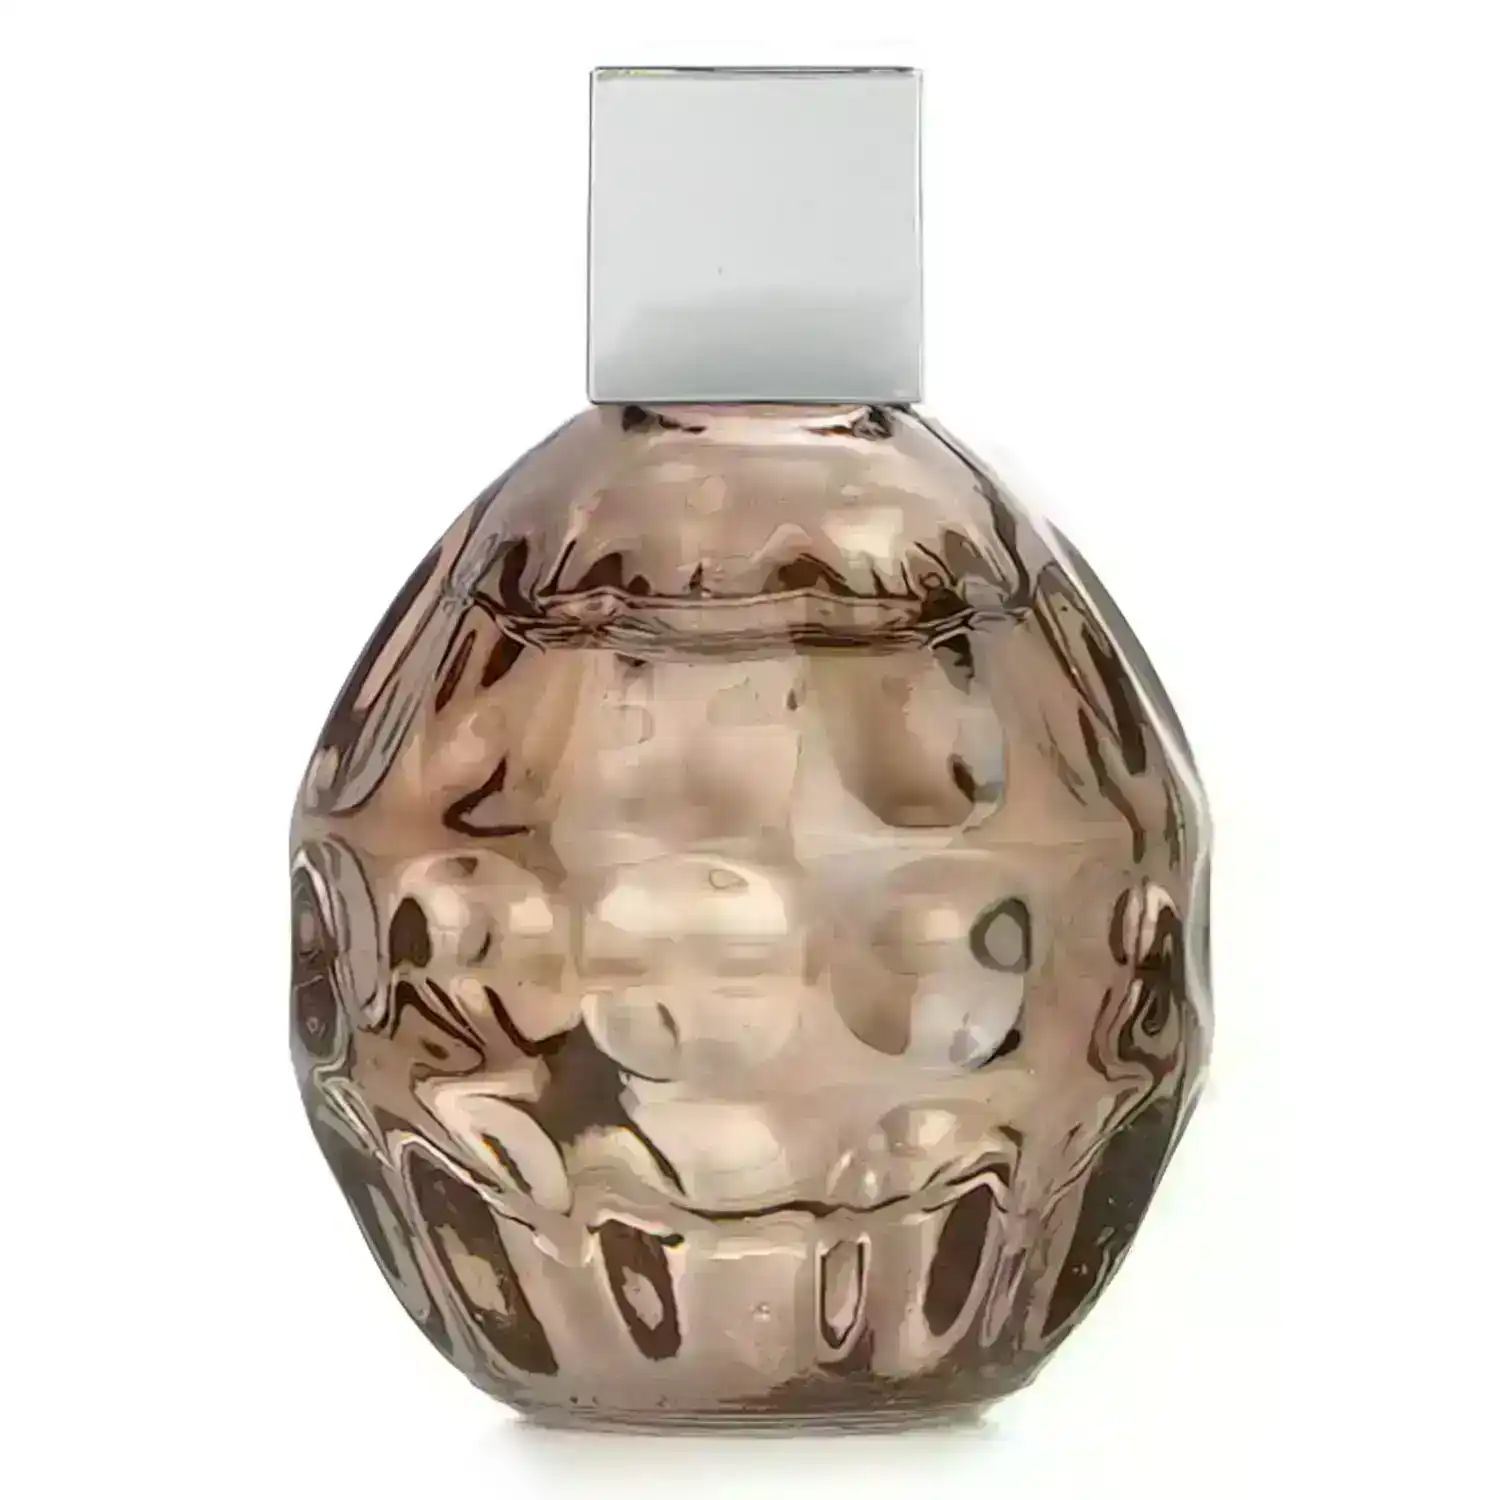 Lanvin - Eclat D'Arpege Eau De Parfum Spray 4.5ml/0.15oz - Perfume